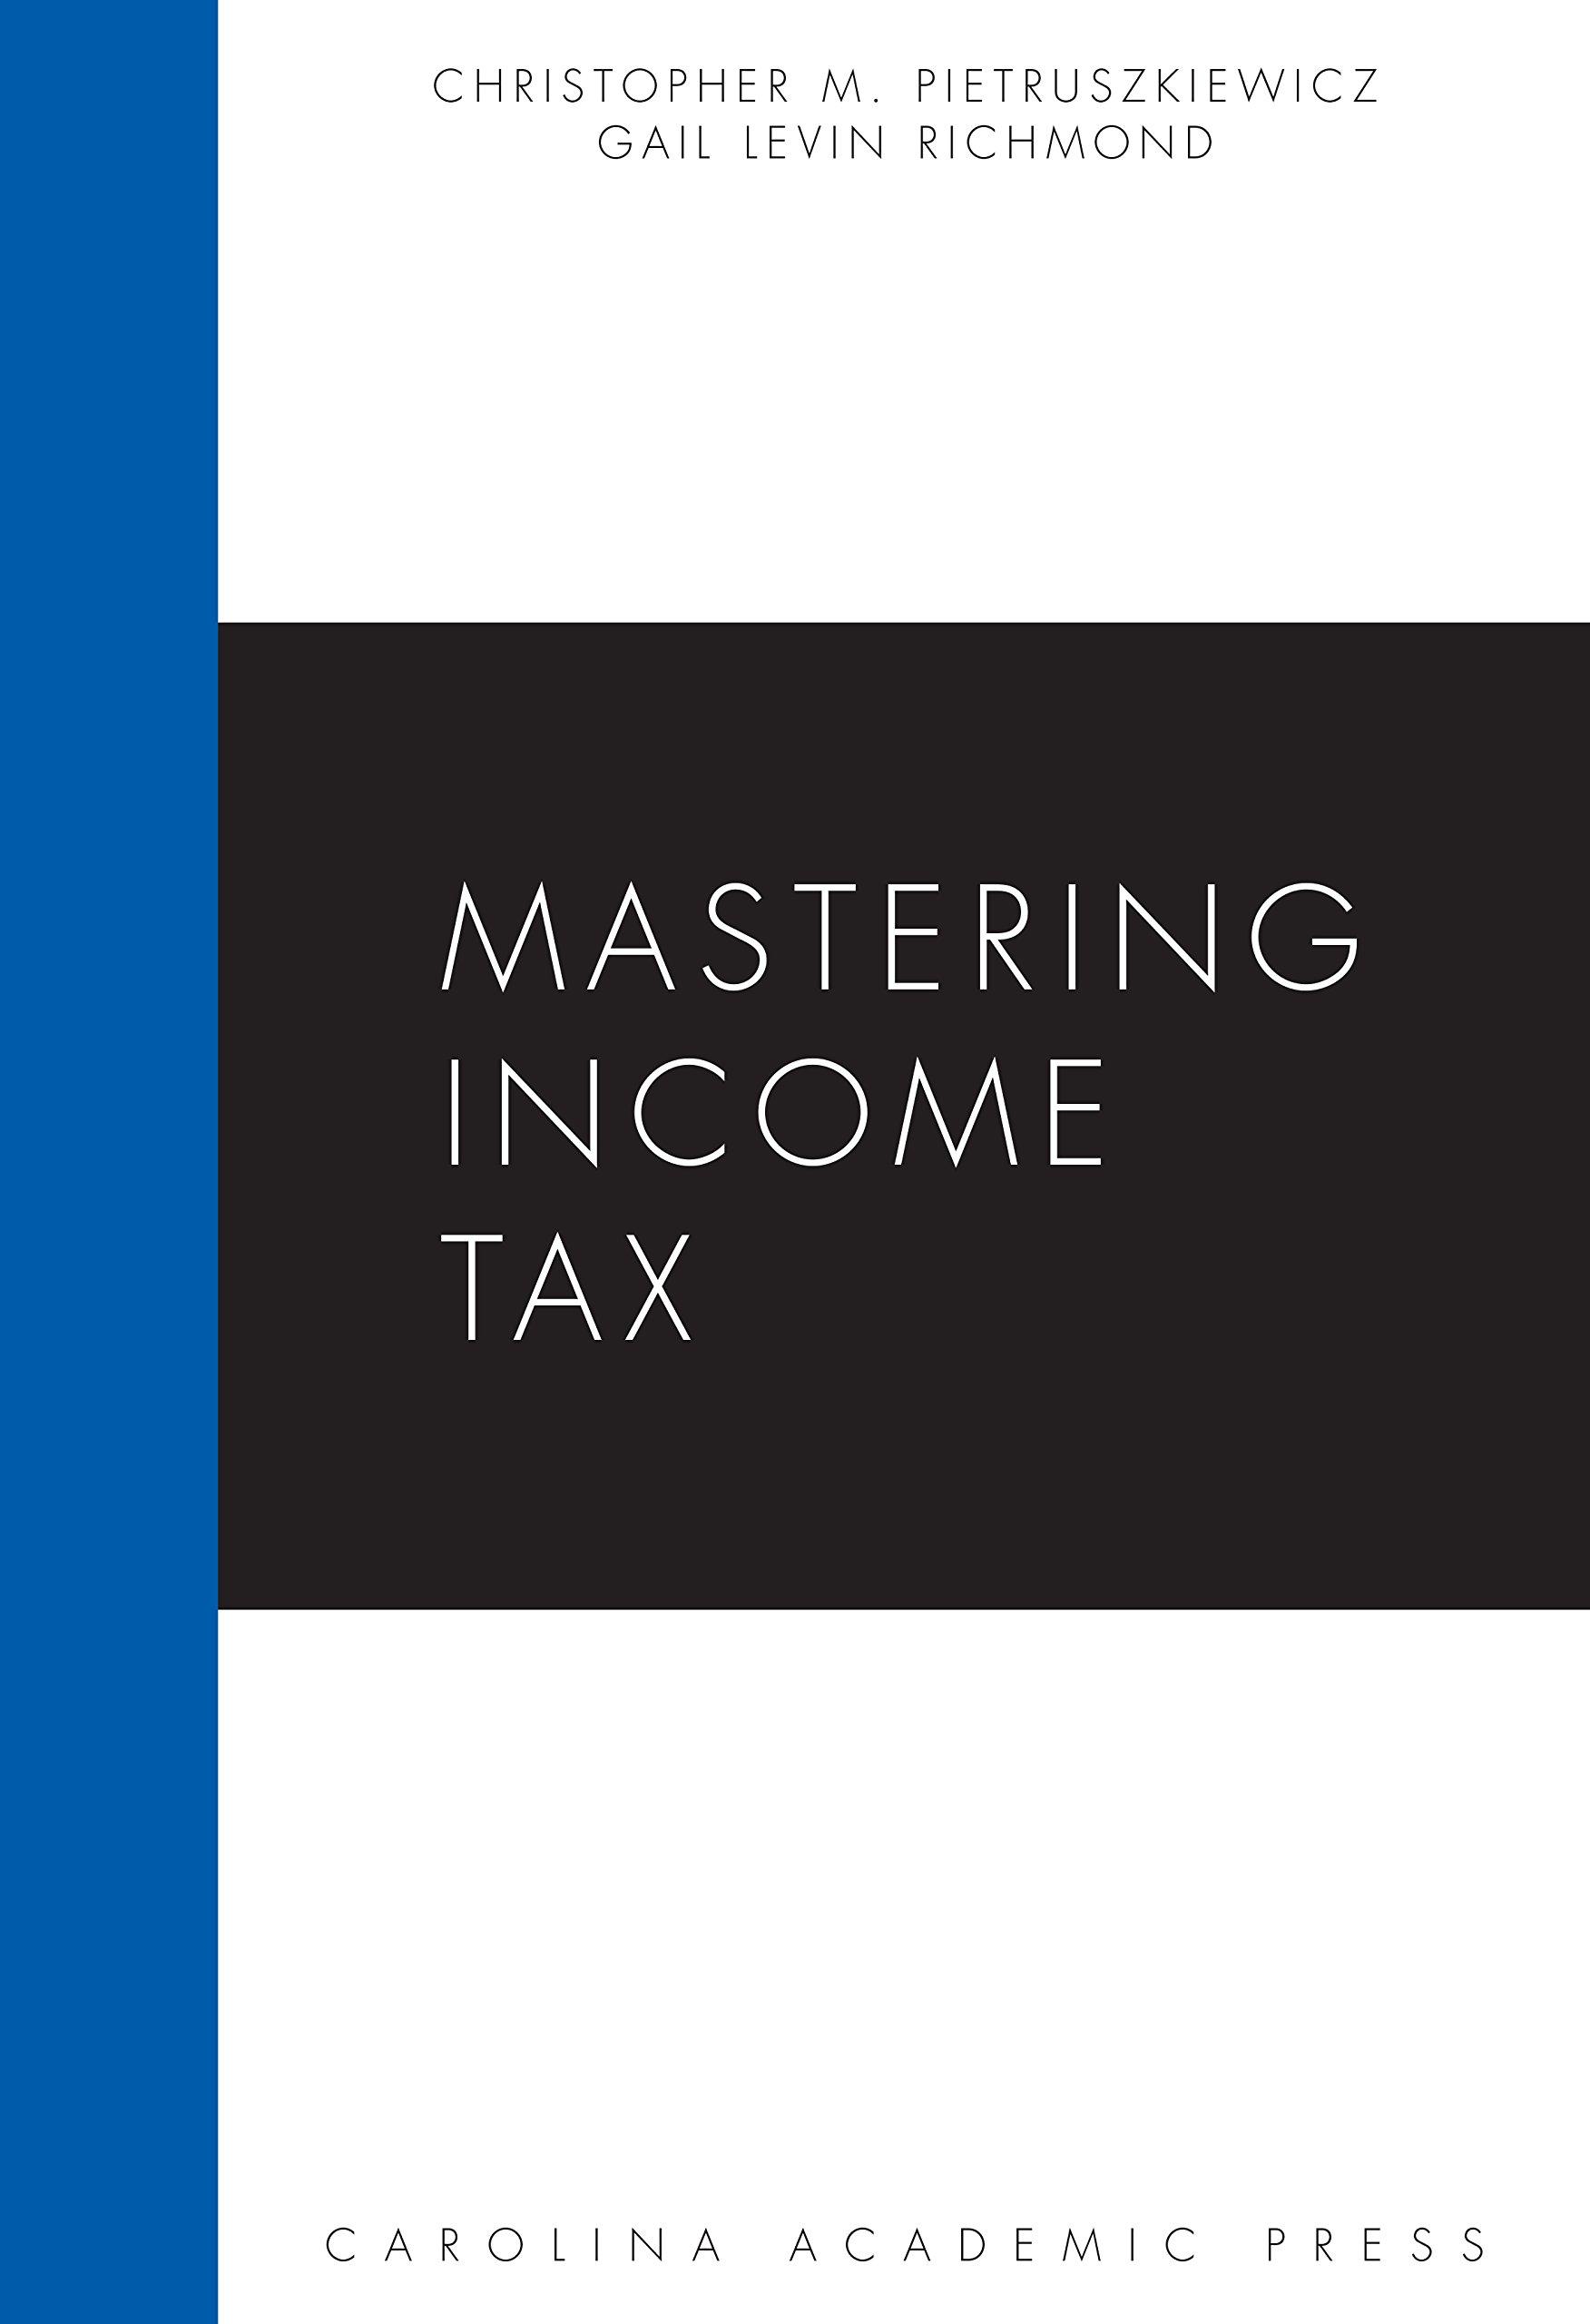 mastering income tax 1st edition christopher pietruszkiewicz, gail richmond 159460374x, 9781594603747